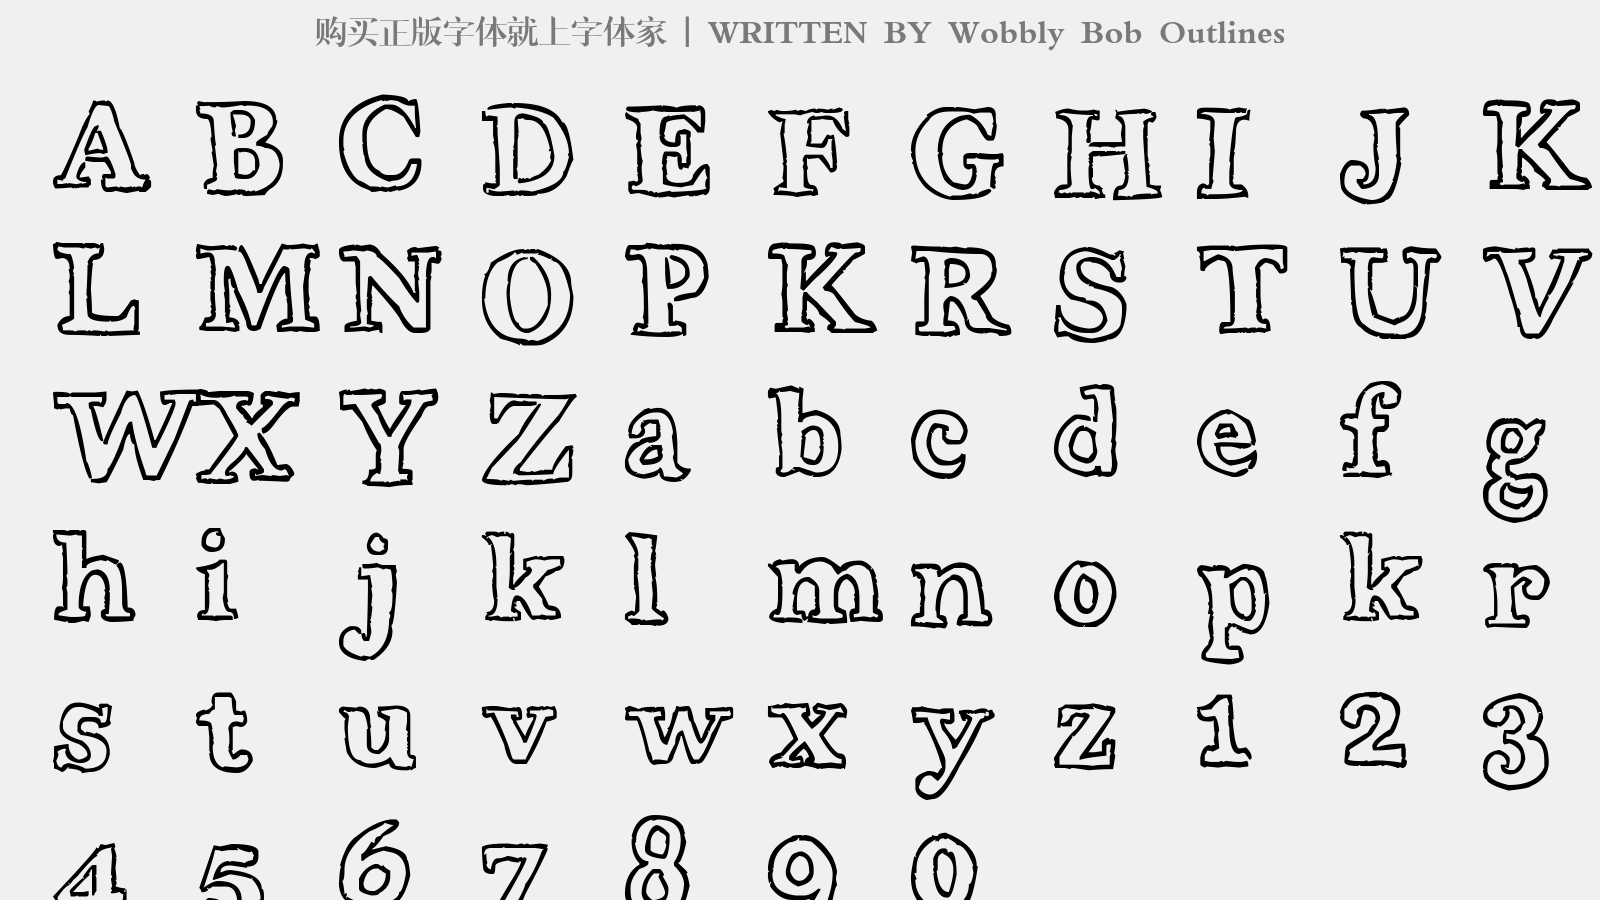 Wobbly Bob Outlines - 大写字母/小写字母/数字